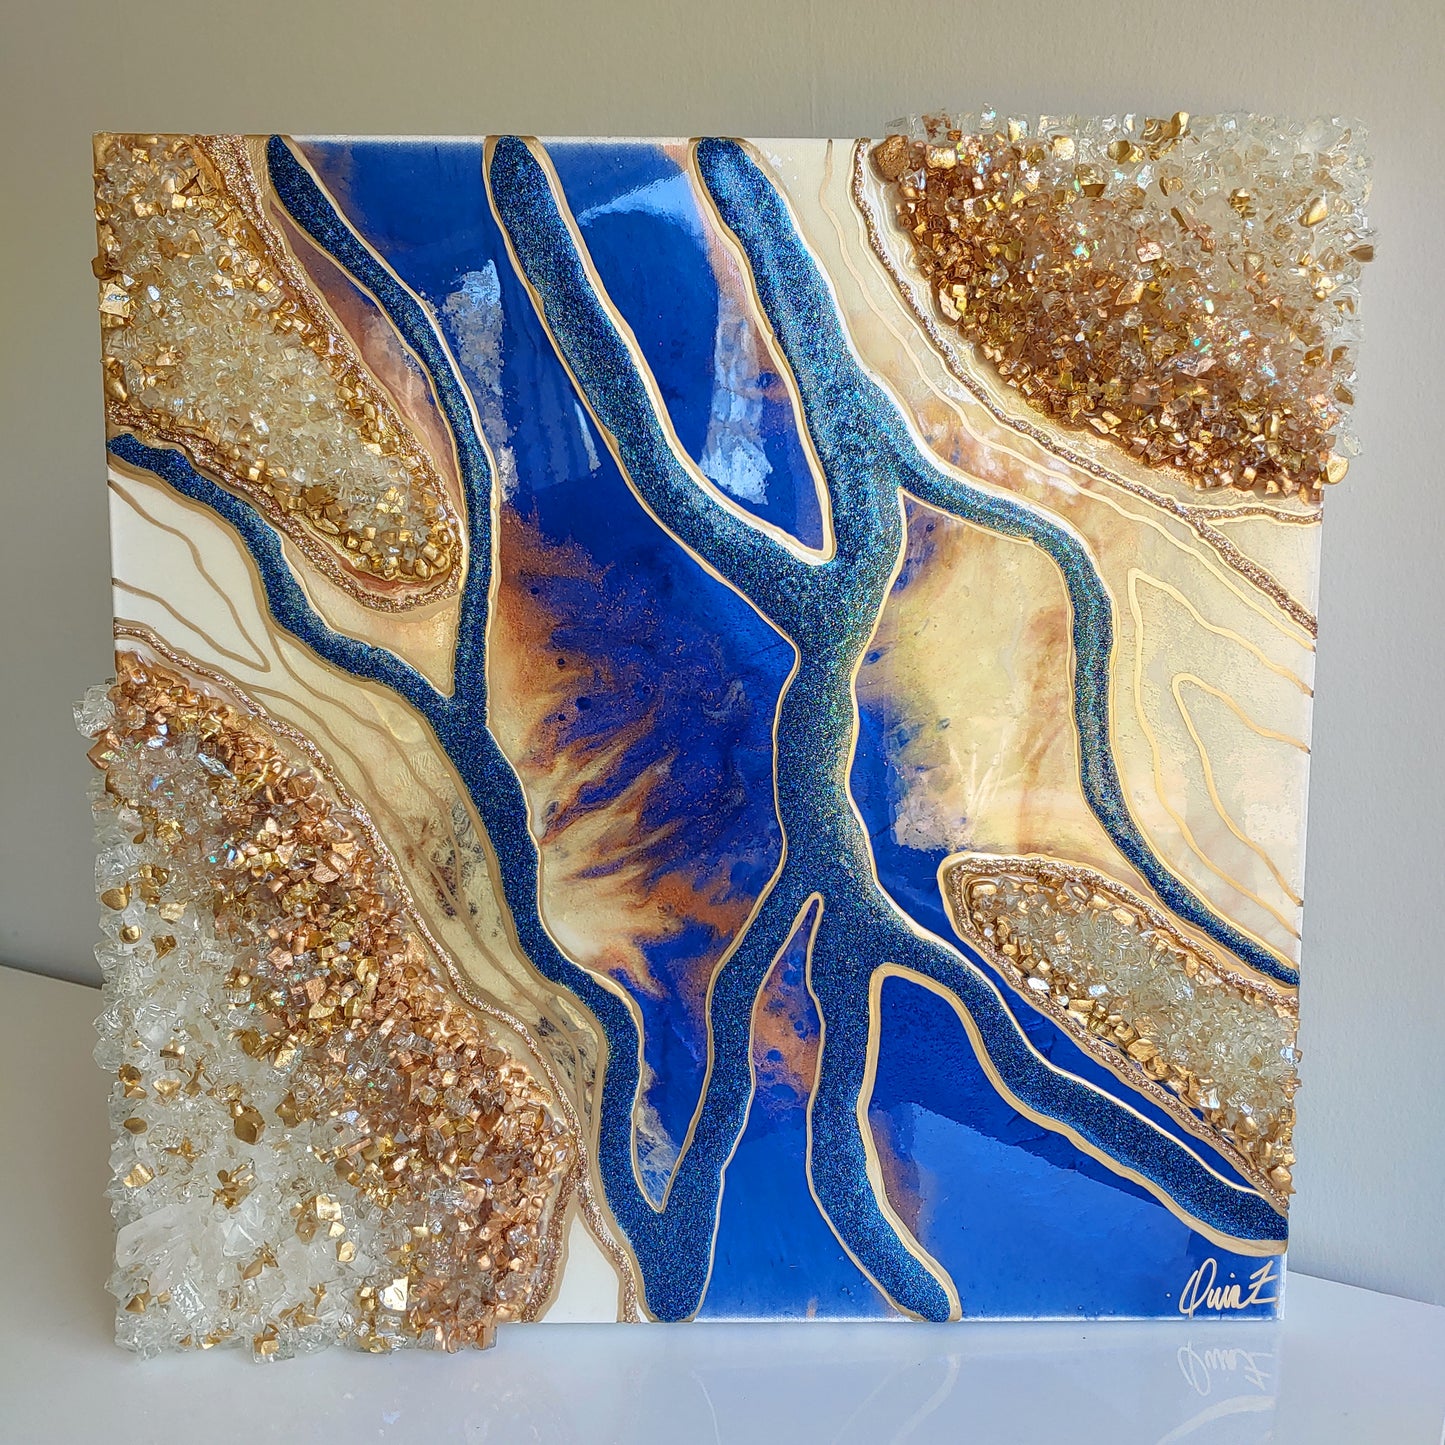 Bleu Dutchess-Resin geode with glass and quartz crystals 18x18